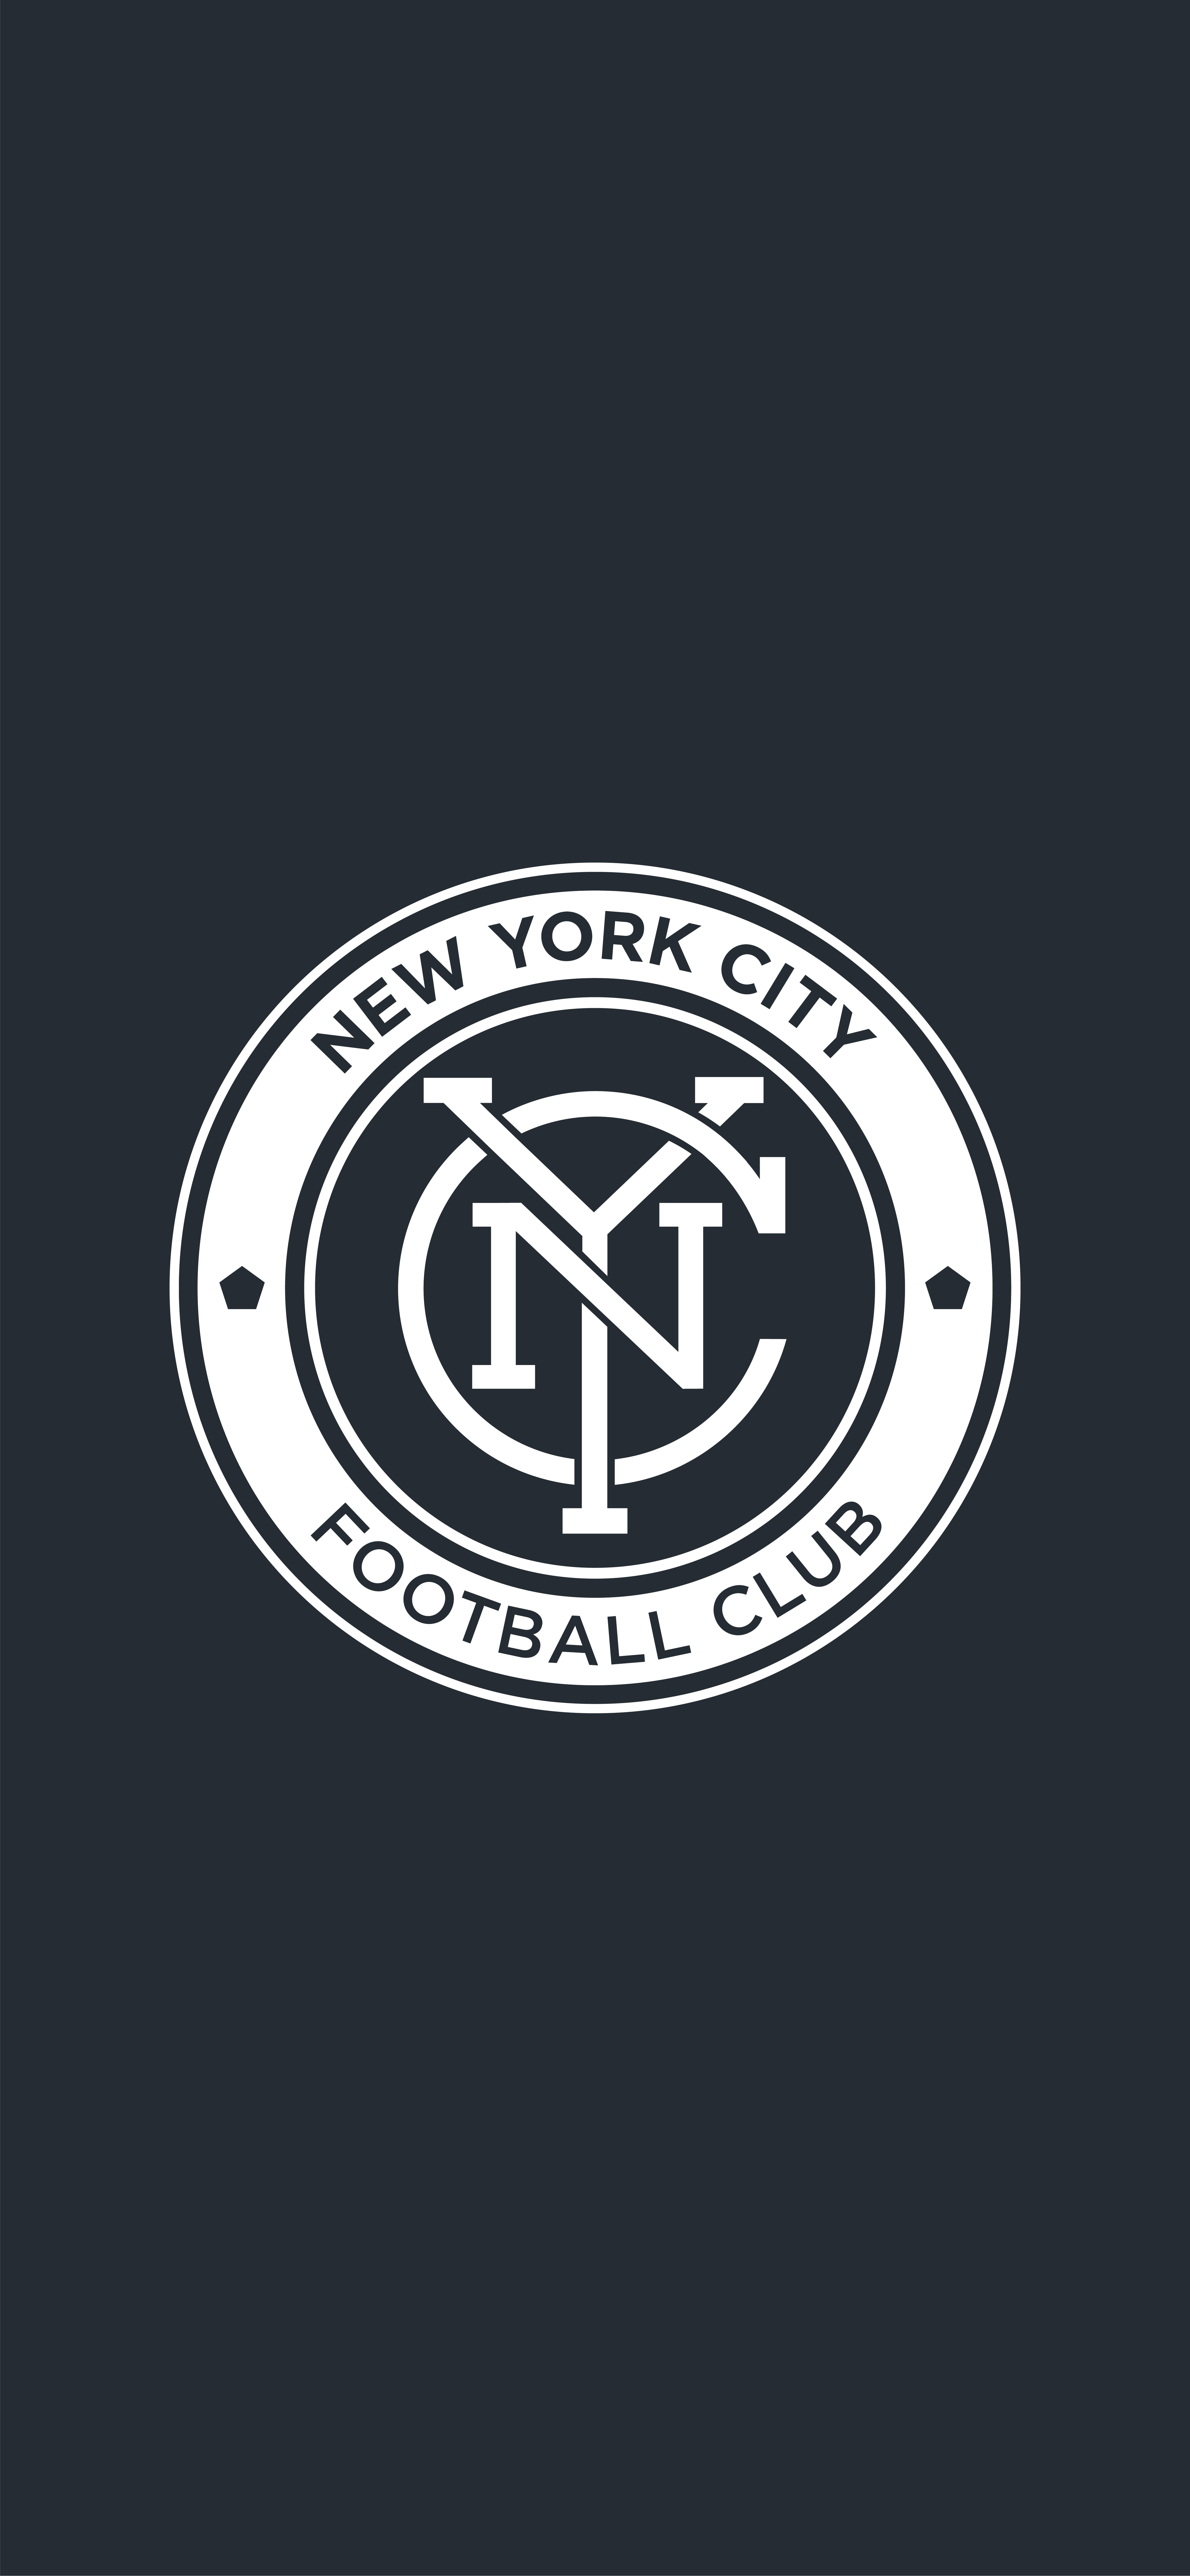 0b9d08ccd70 logo soccer mls new york city fc wallpaper